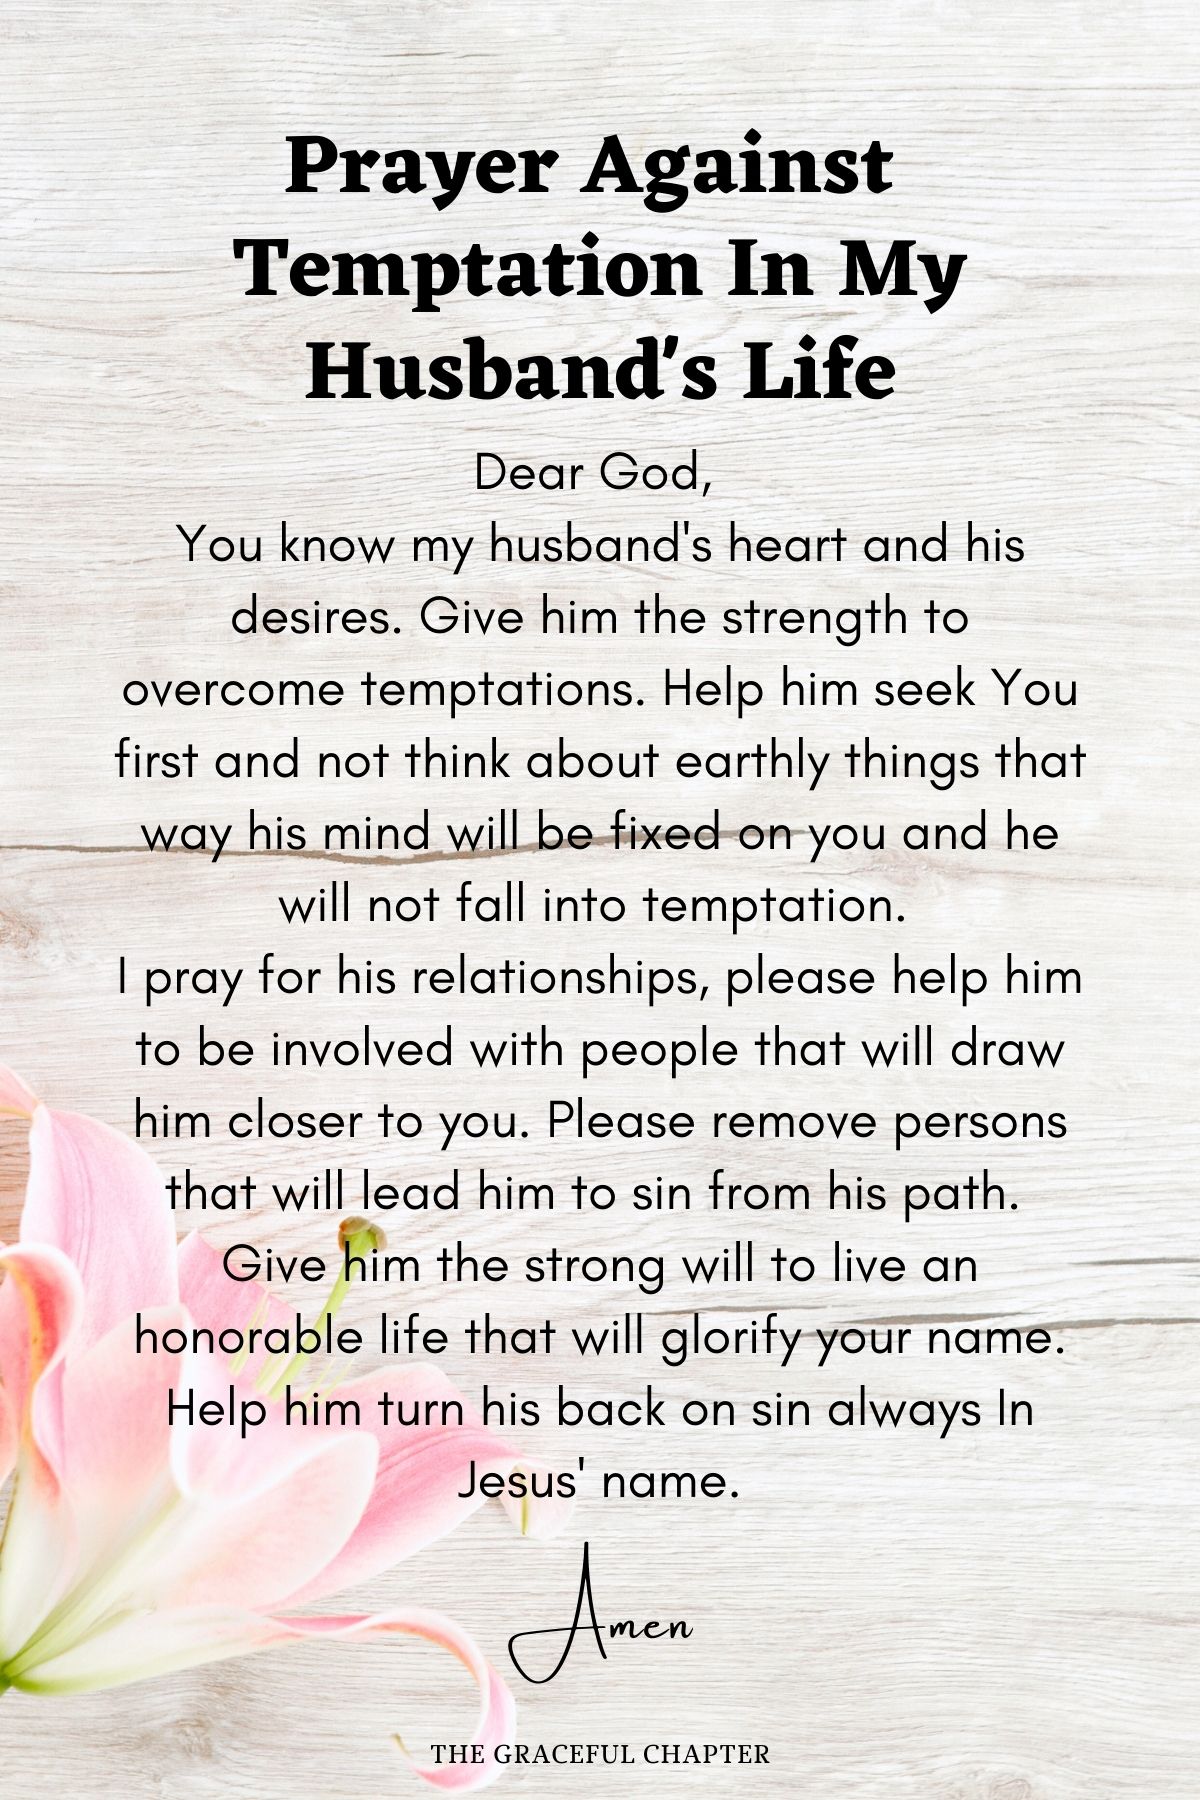 Prayer against temptation in my husband's life